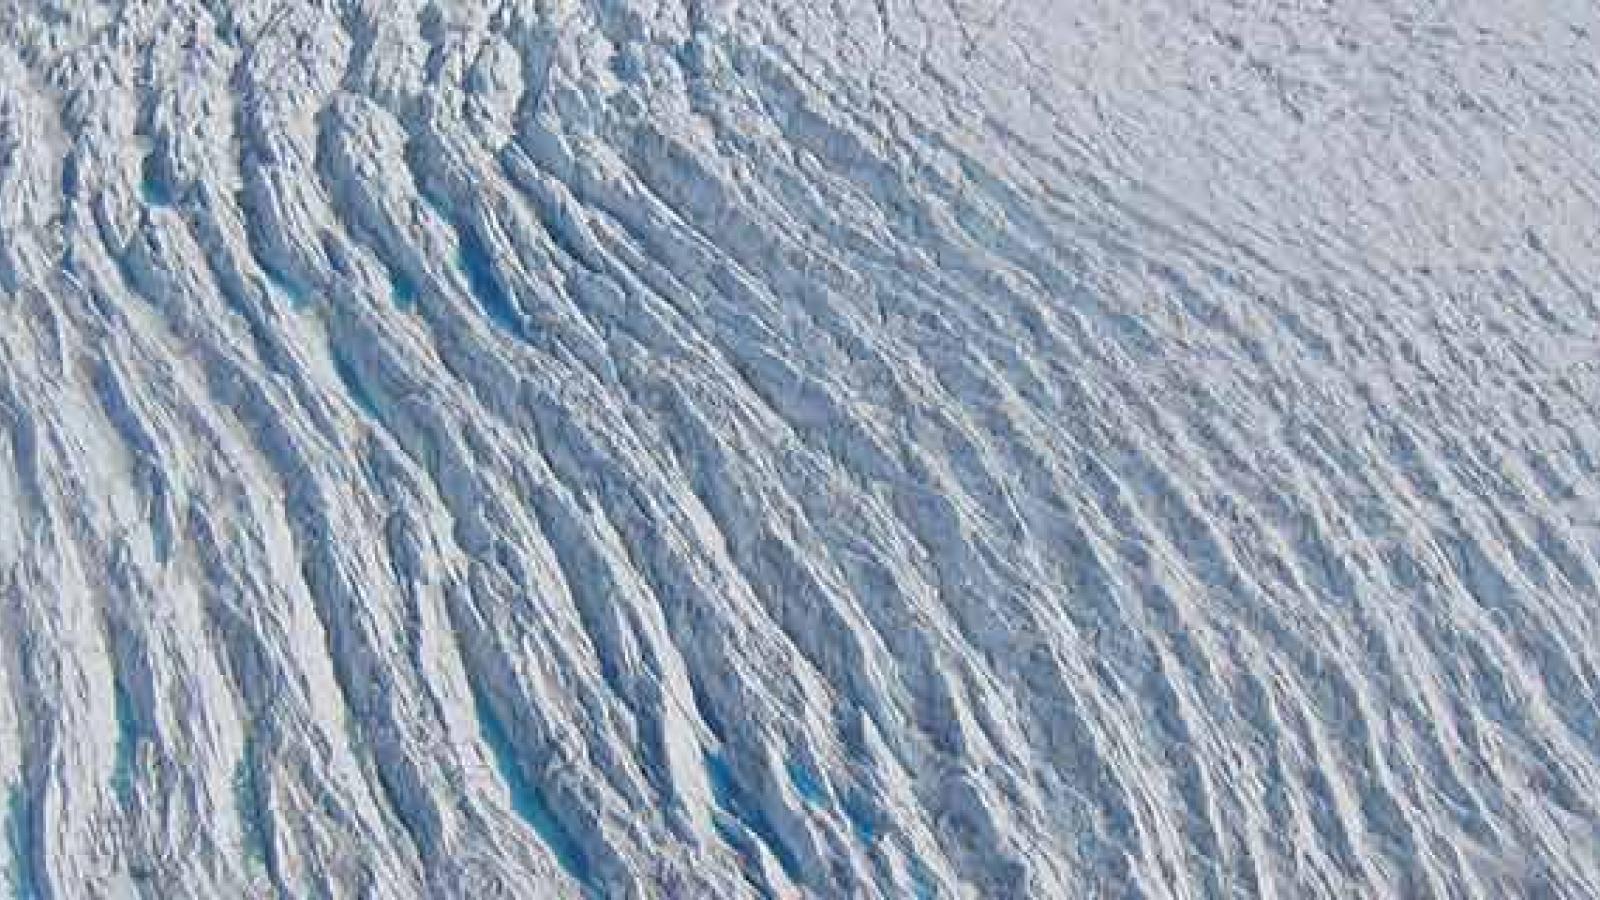 Crevasses on the Greenland Ice Sheet